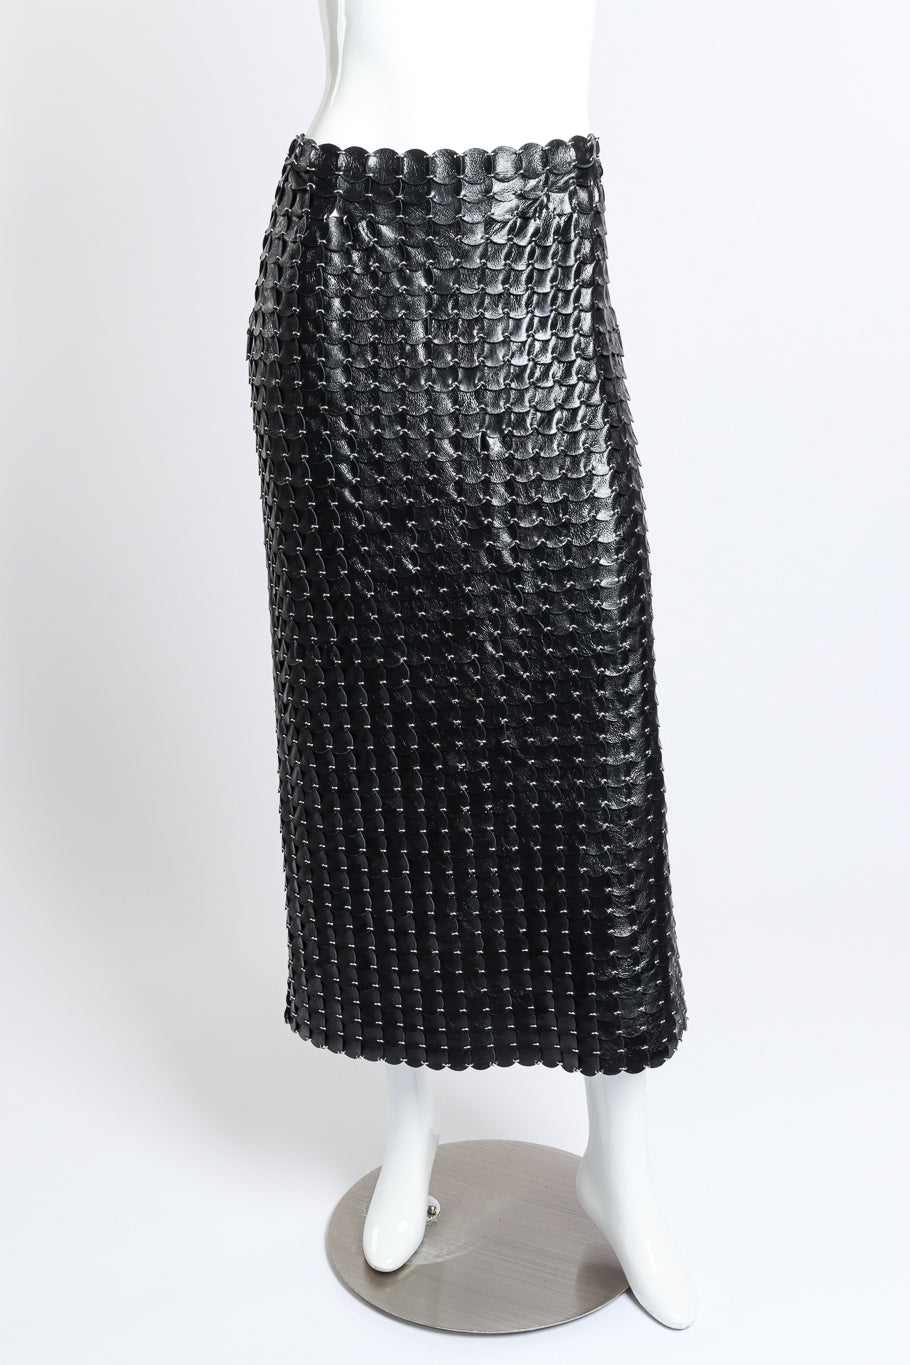 Paco Rabanne 2020 F/W Skirt on mannequin @RECESS LA